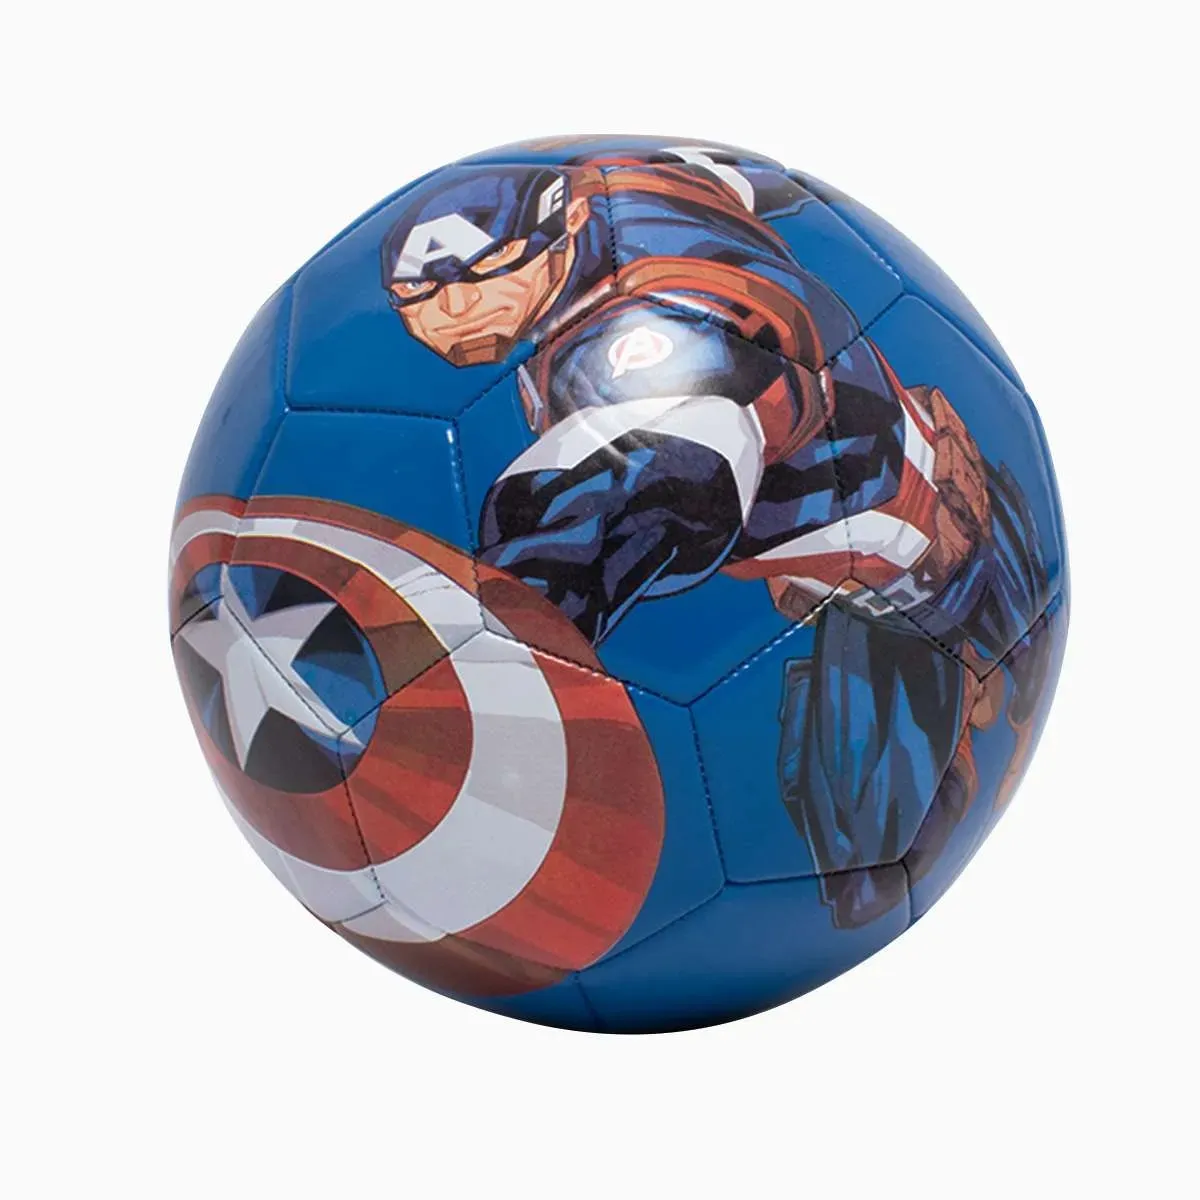 Balon Futbol De Formacion Marvel Golty